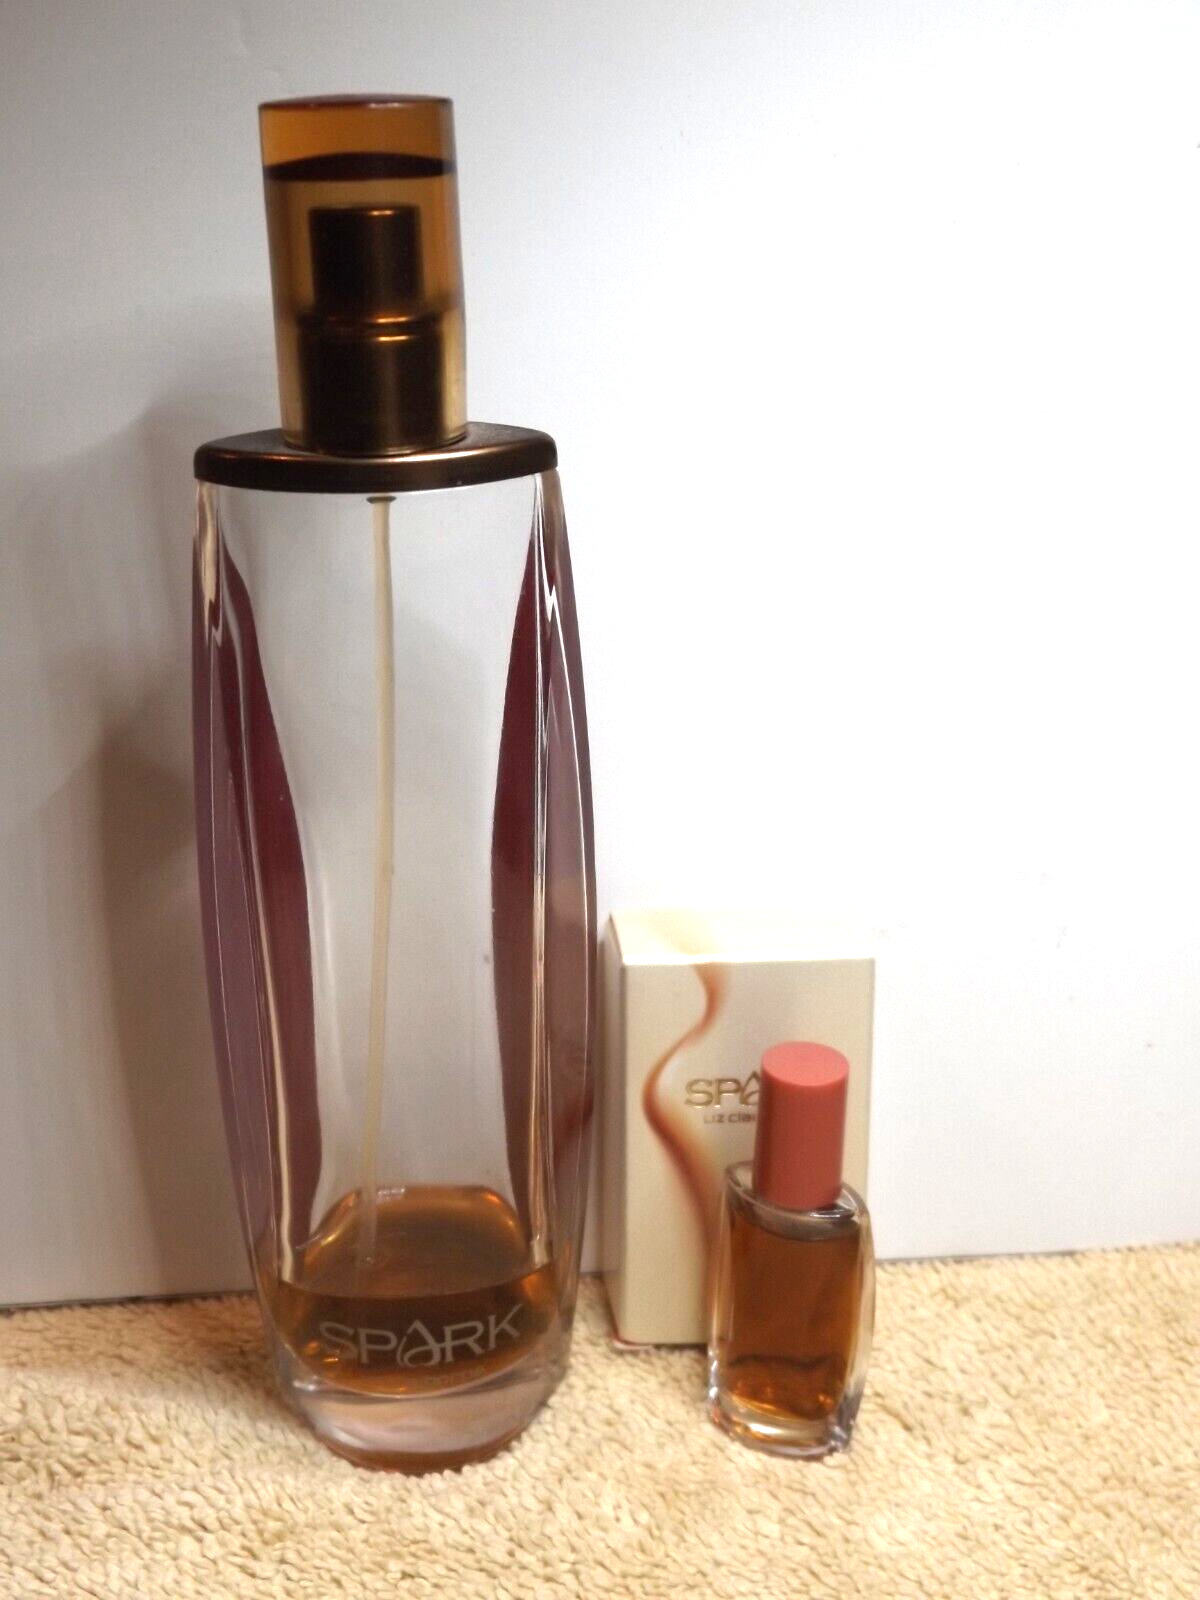 Liz Claiborne SPARK Eau De Parfum Spray 100 ml Partial & 5.3 ml Full